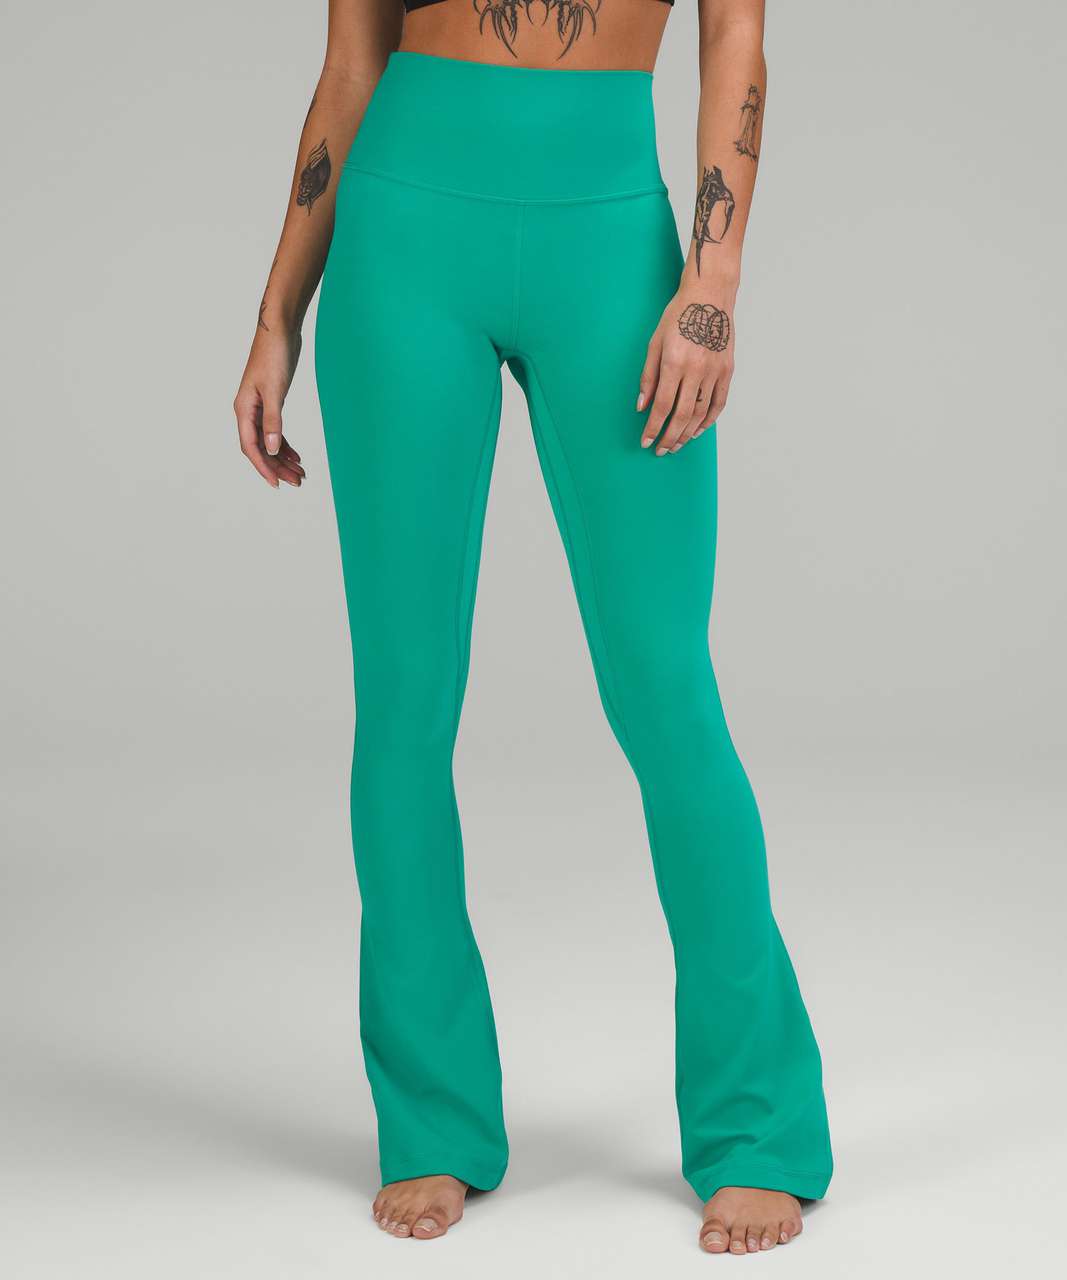 lululemon Align High-Rise Pant 25 Maldives green leggings size 20 size 3XL  NEW